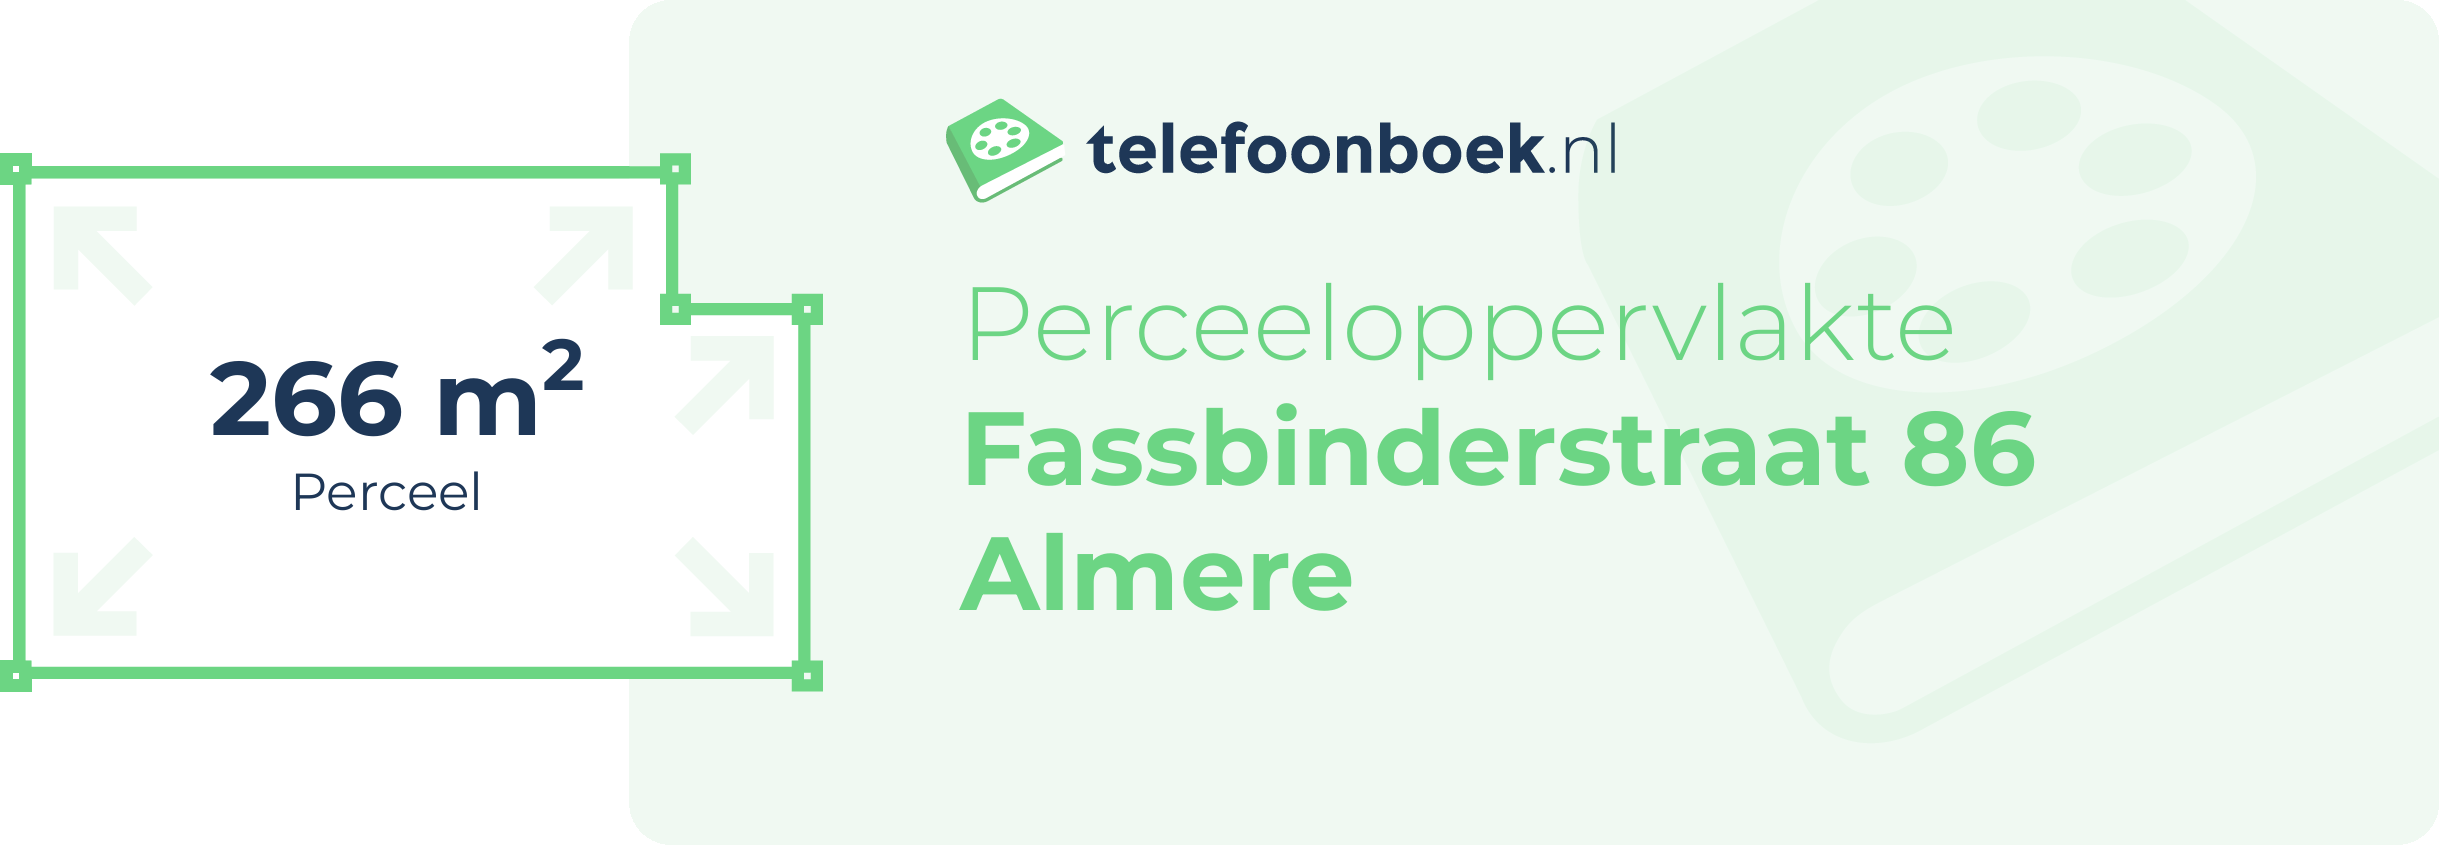 Perceeloppervlakte Fassbinderstraat 86 Almere